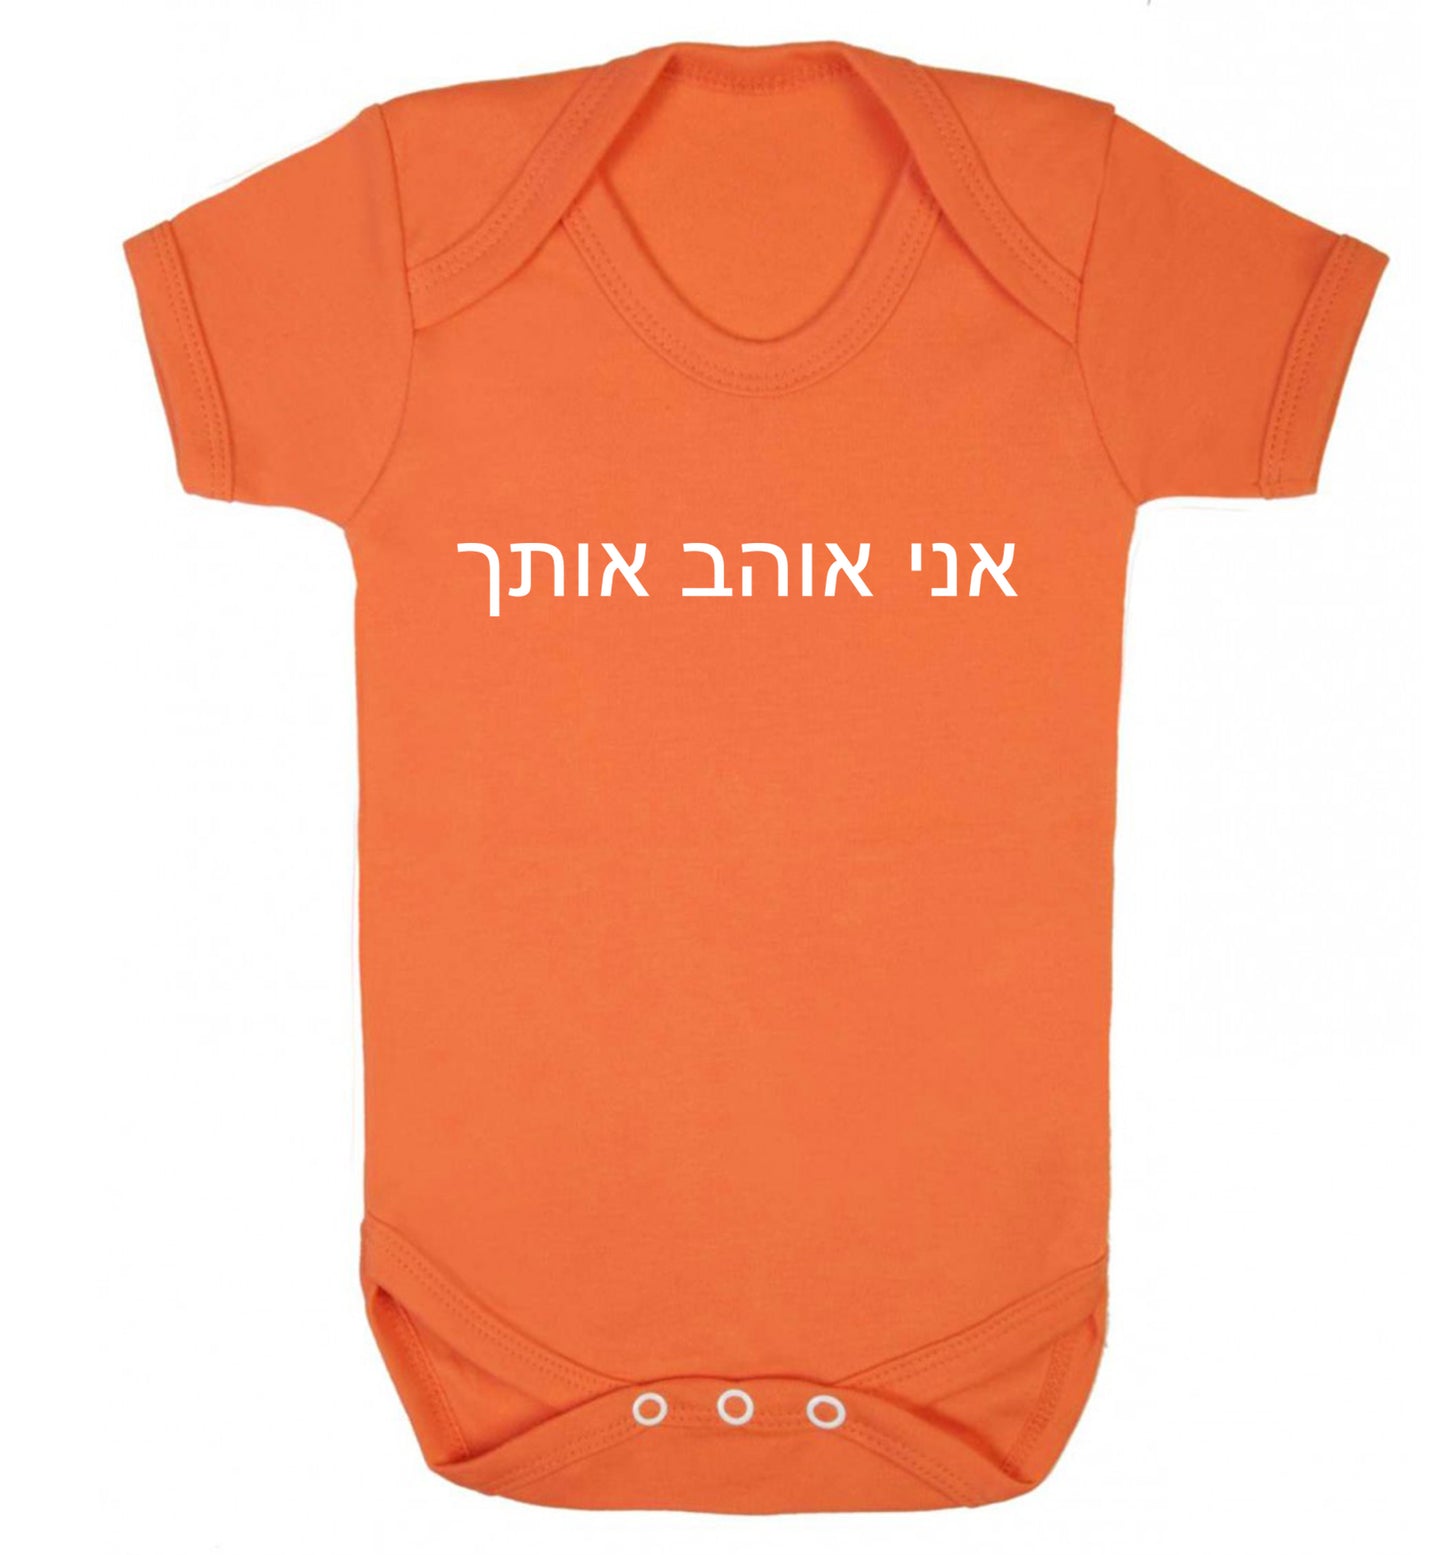 ___ ____ ____ - I love you Baby Vest orange 18-24 months